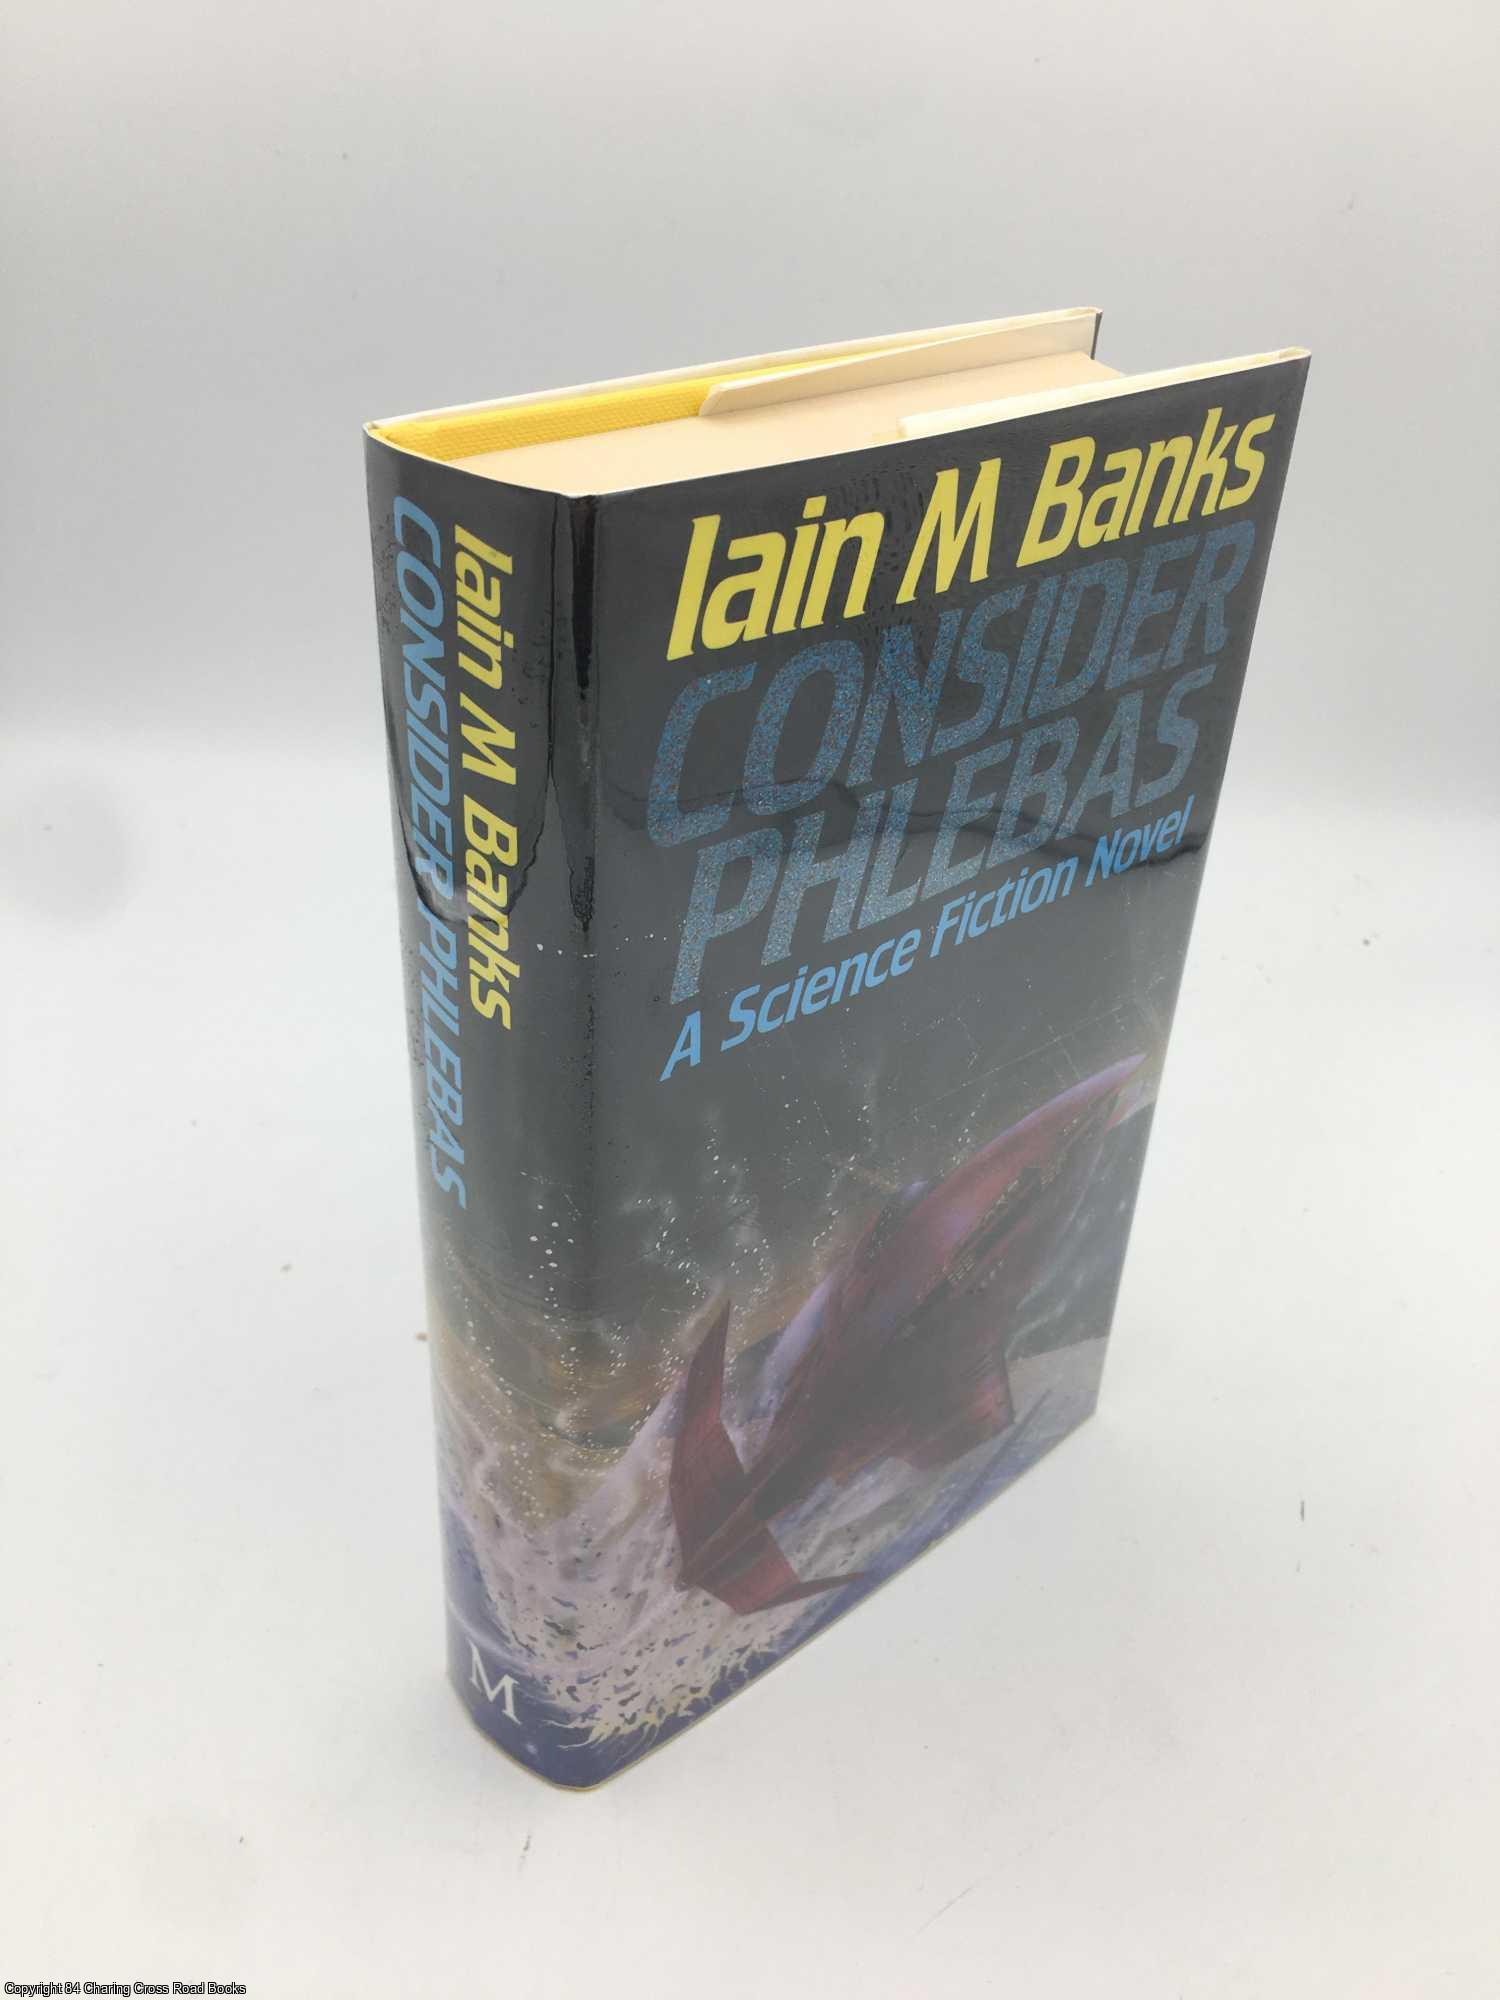 Consider Phlebas (Culture): 9780316005388: Banks, Iain M.: Books 